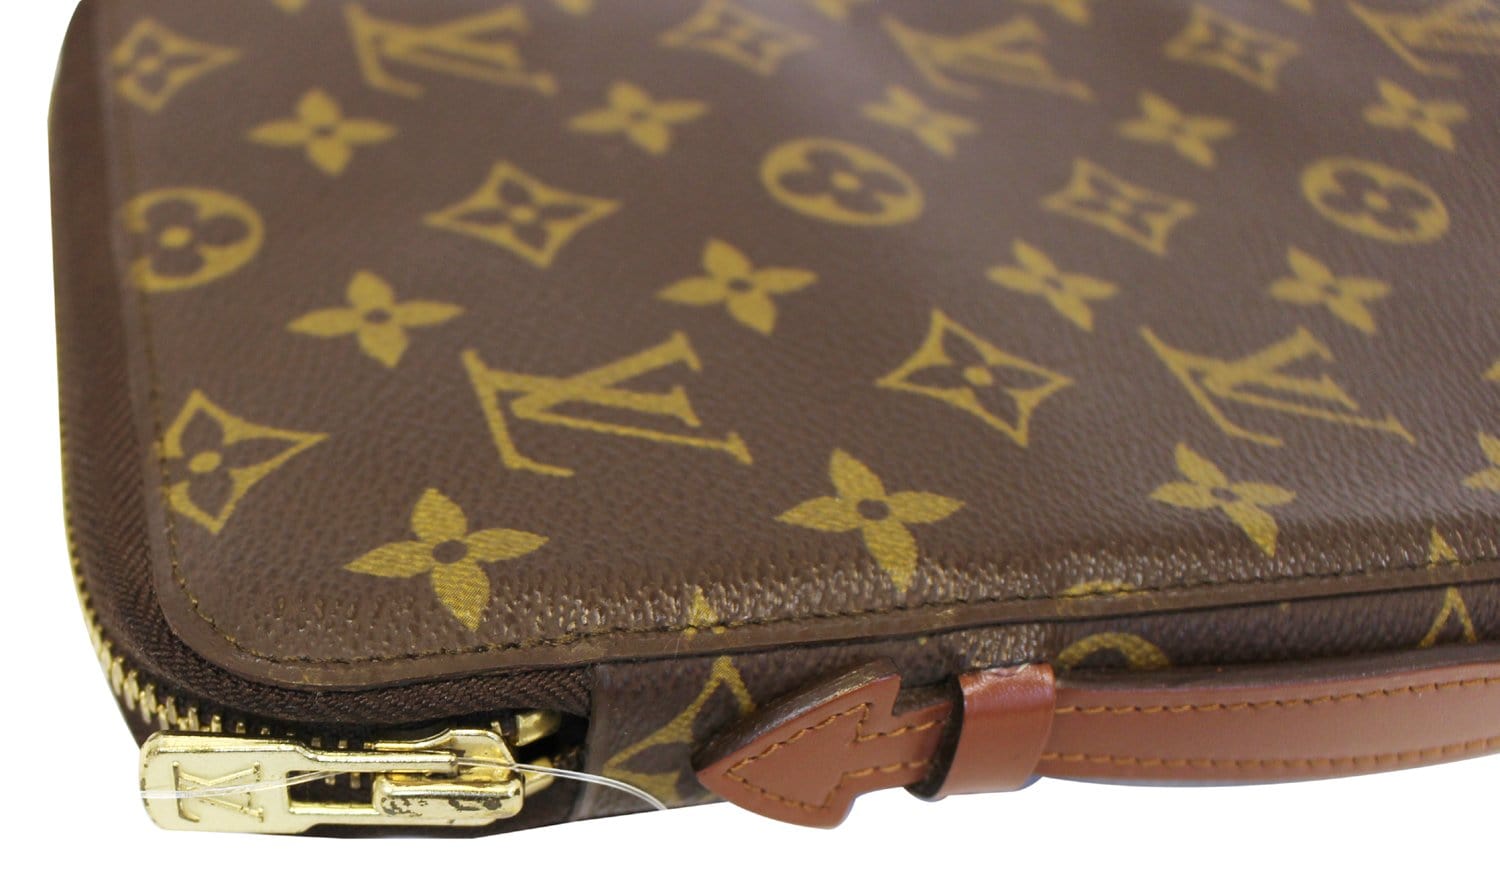 Louis Vuitton Travel Case Monogram 100ml Brown